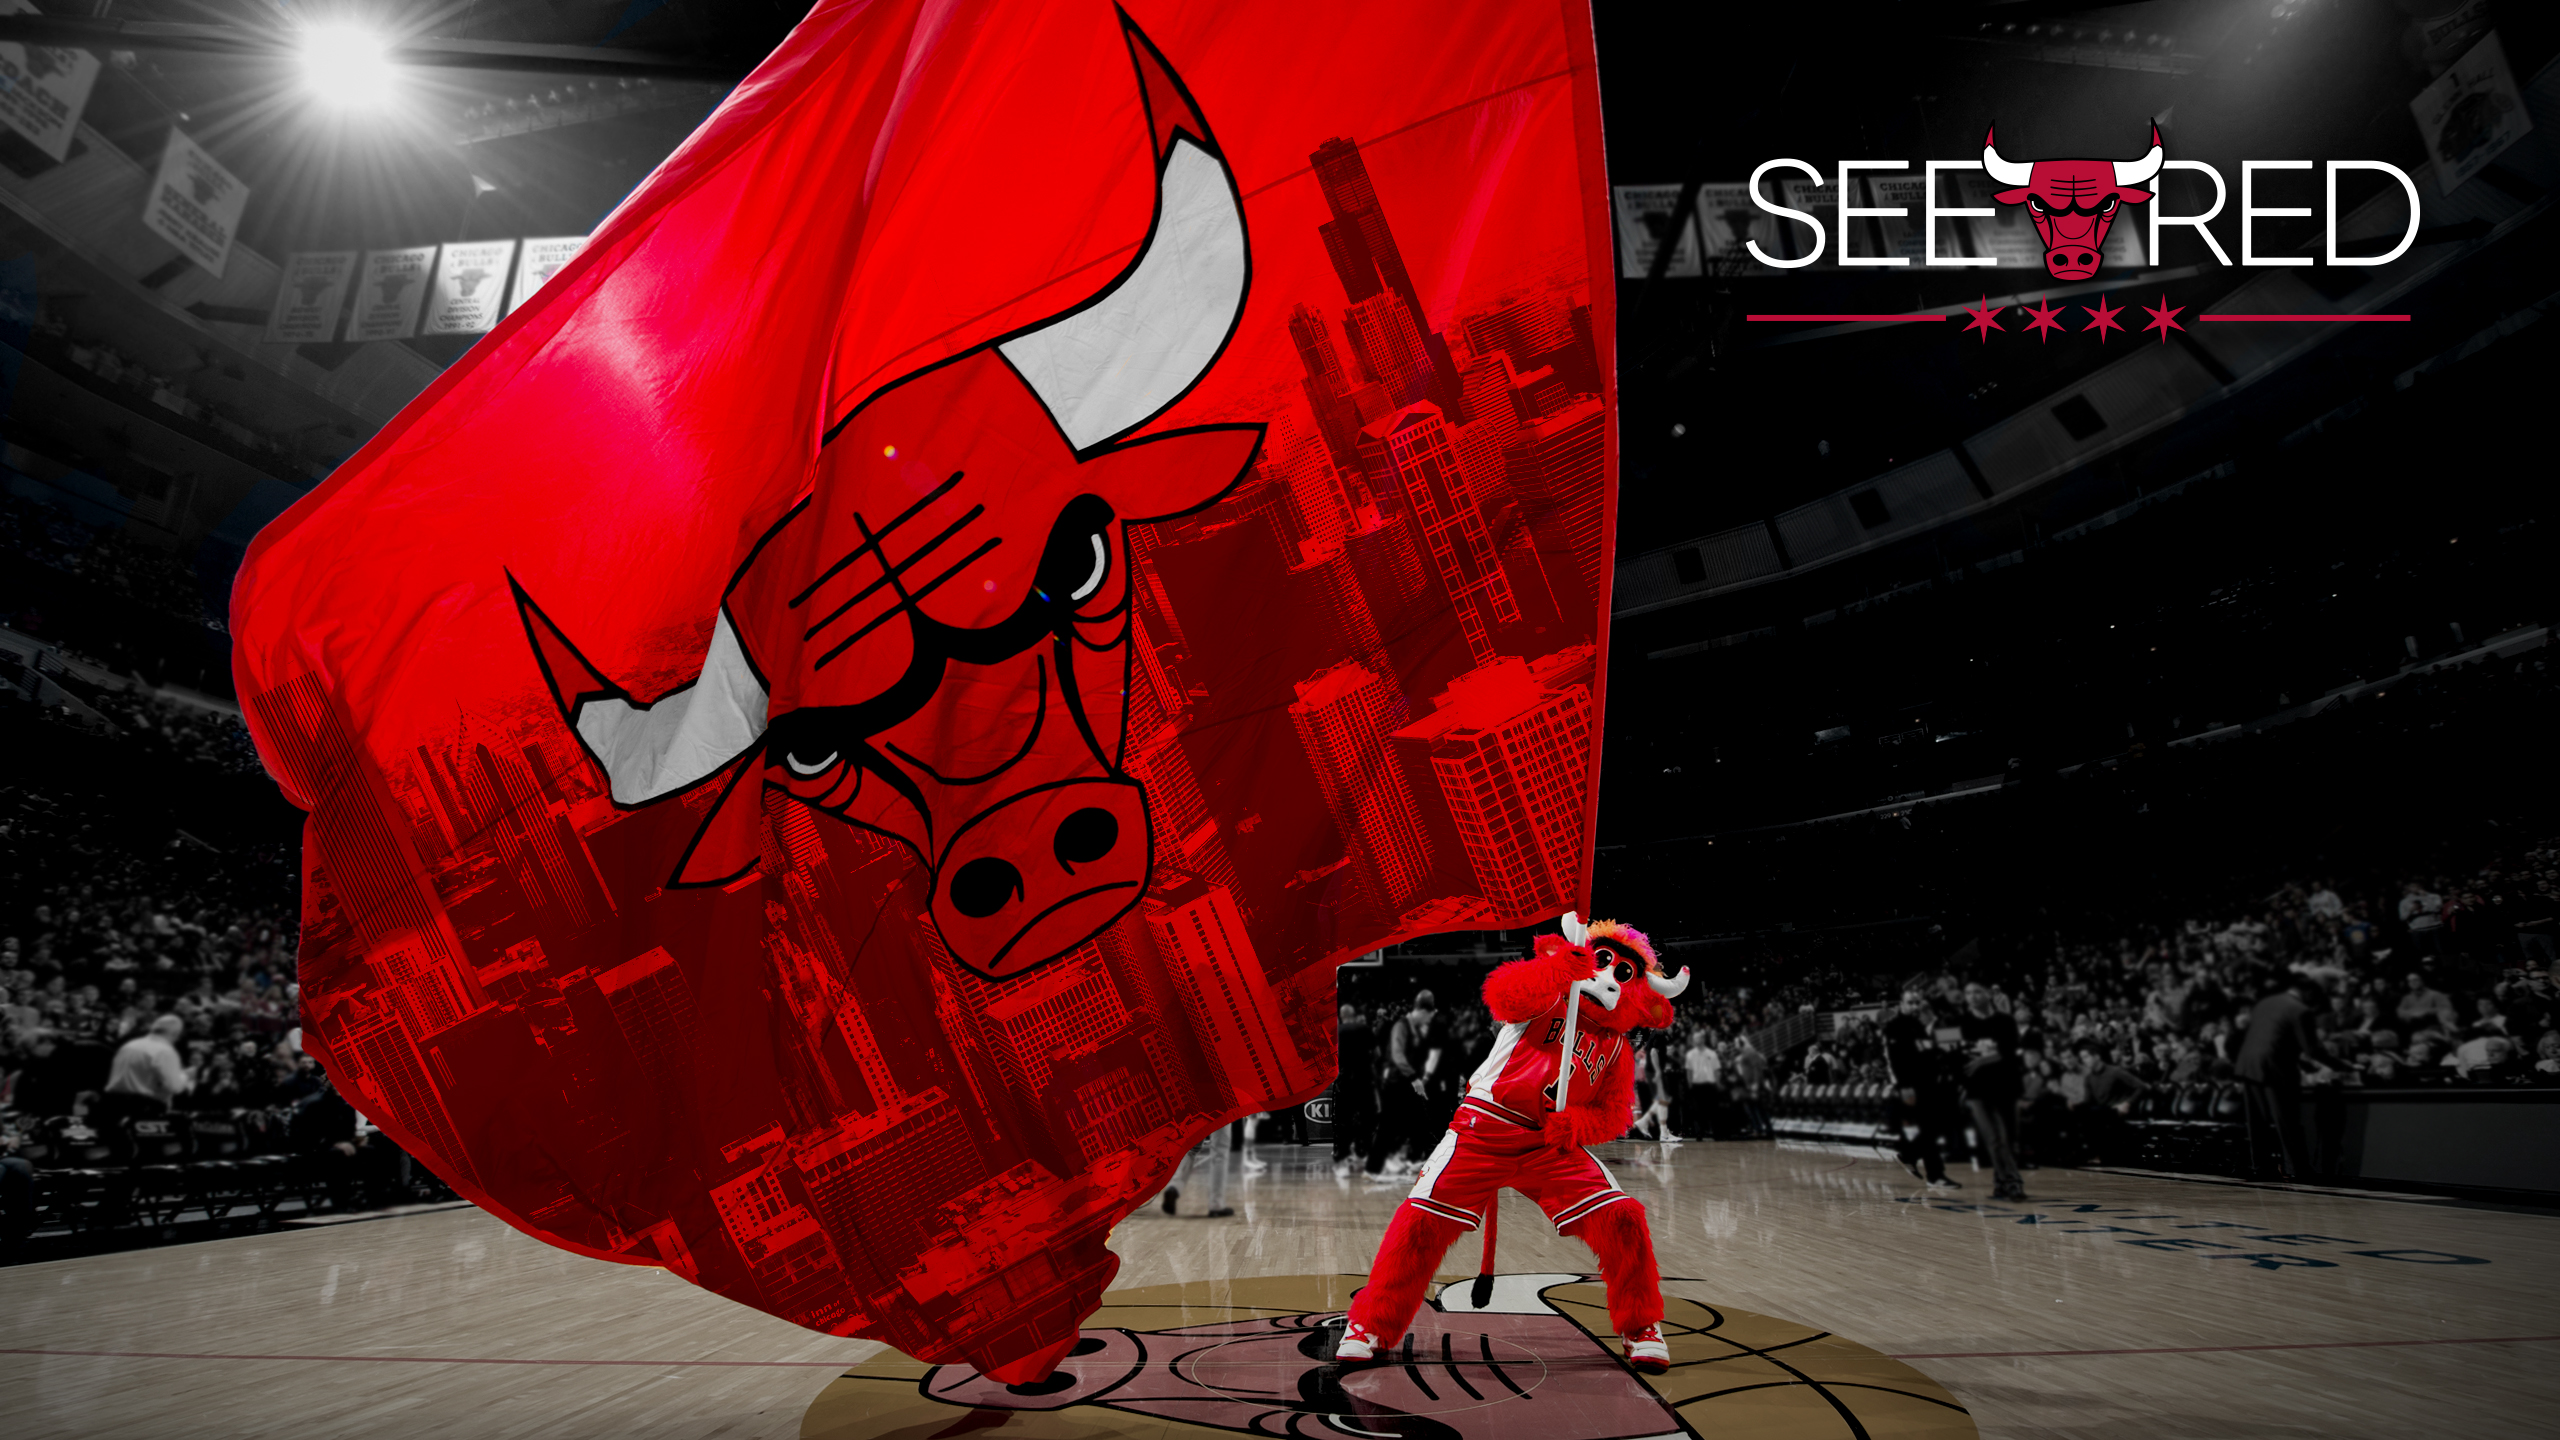 Pin Chicago Bulls See Red Screensaver